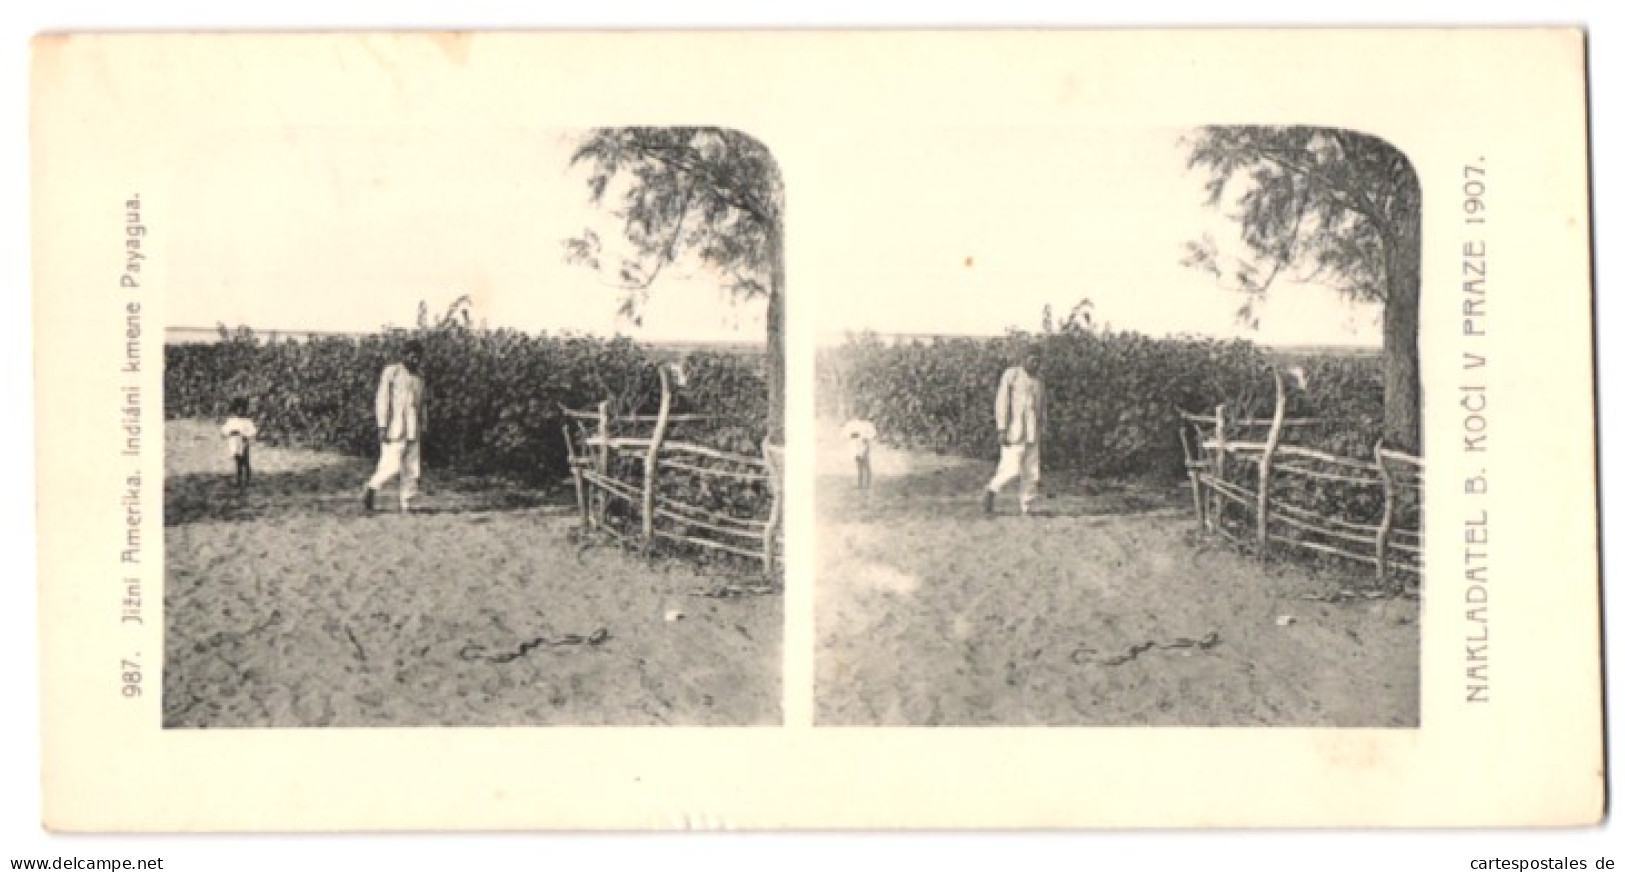 Stereo-Fotografie Lichtdruck Bedrich Koci, Prag, Ansicht Payagua, Südamerika 1907, Jizni Amerika, Indiani Kmene  - Stereo-Photographie